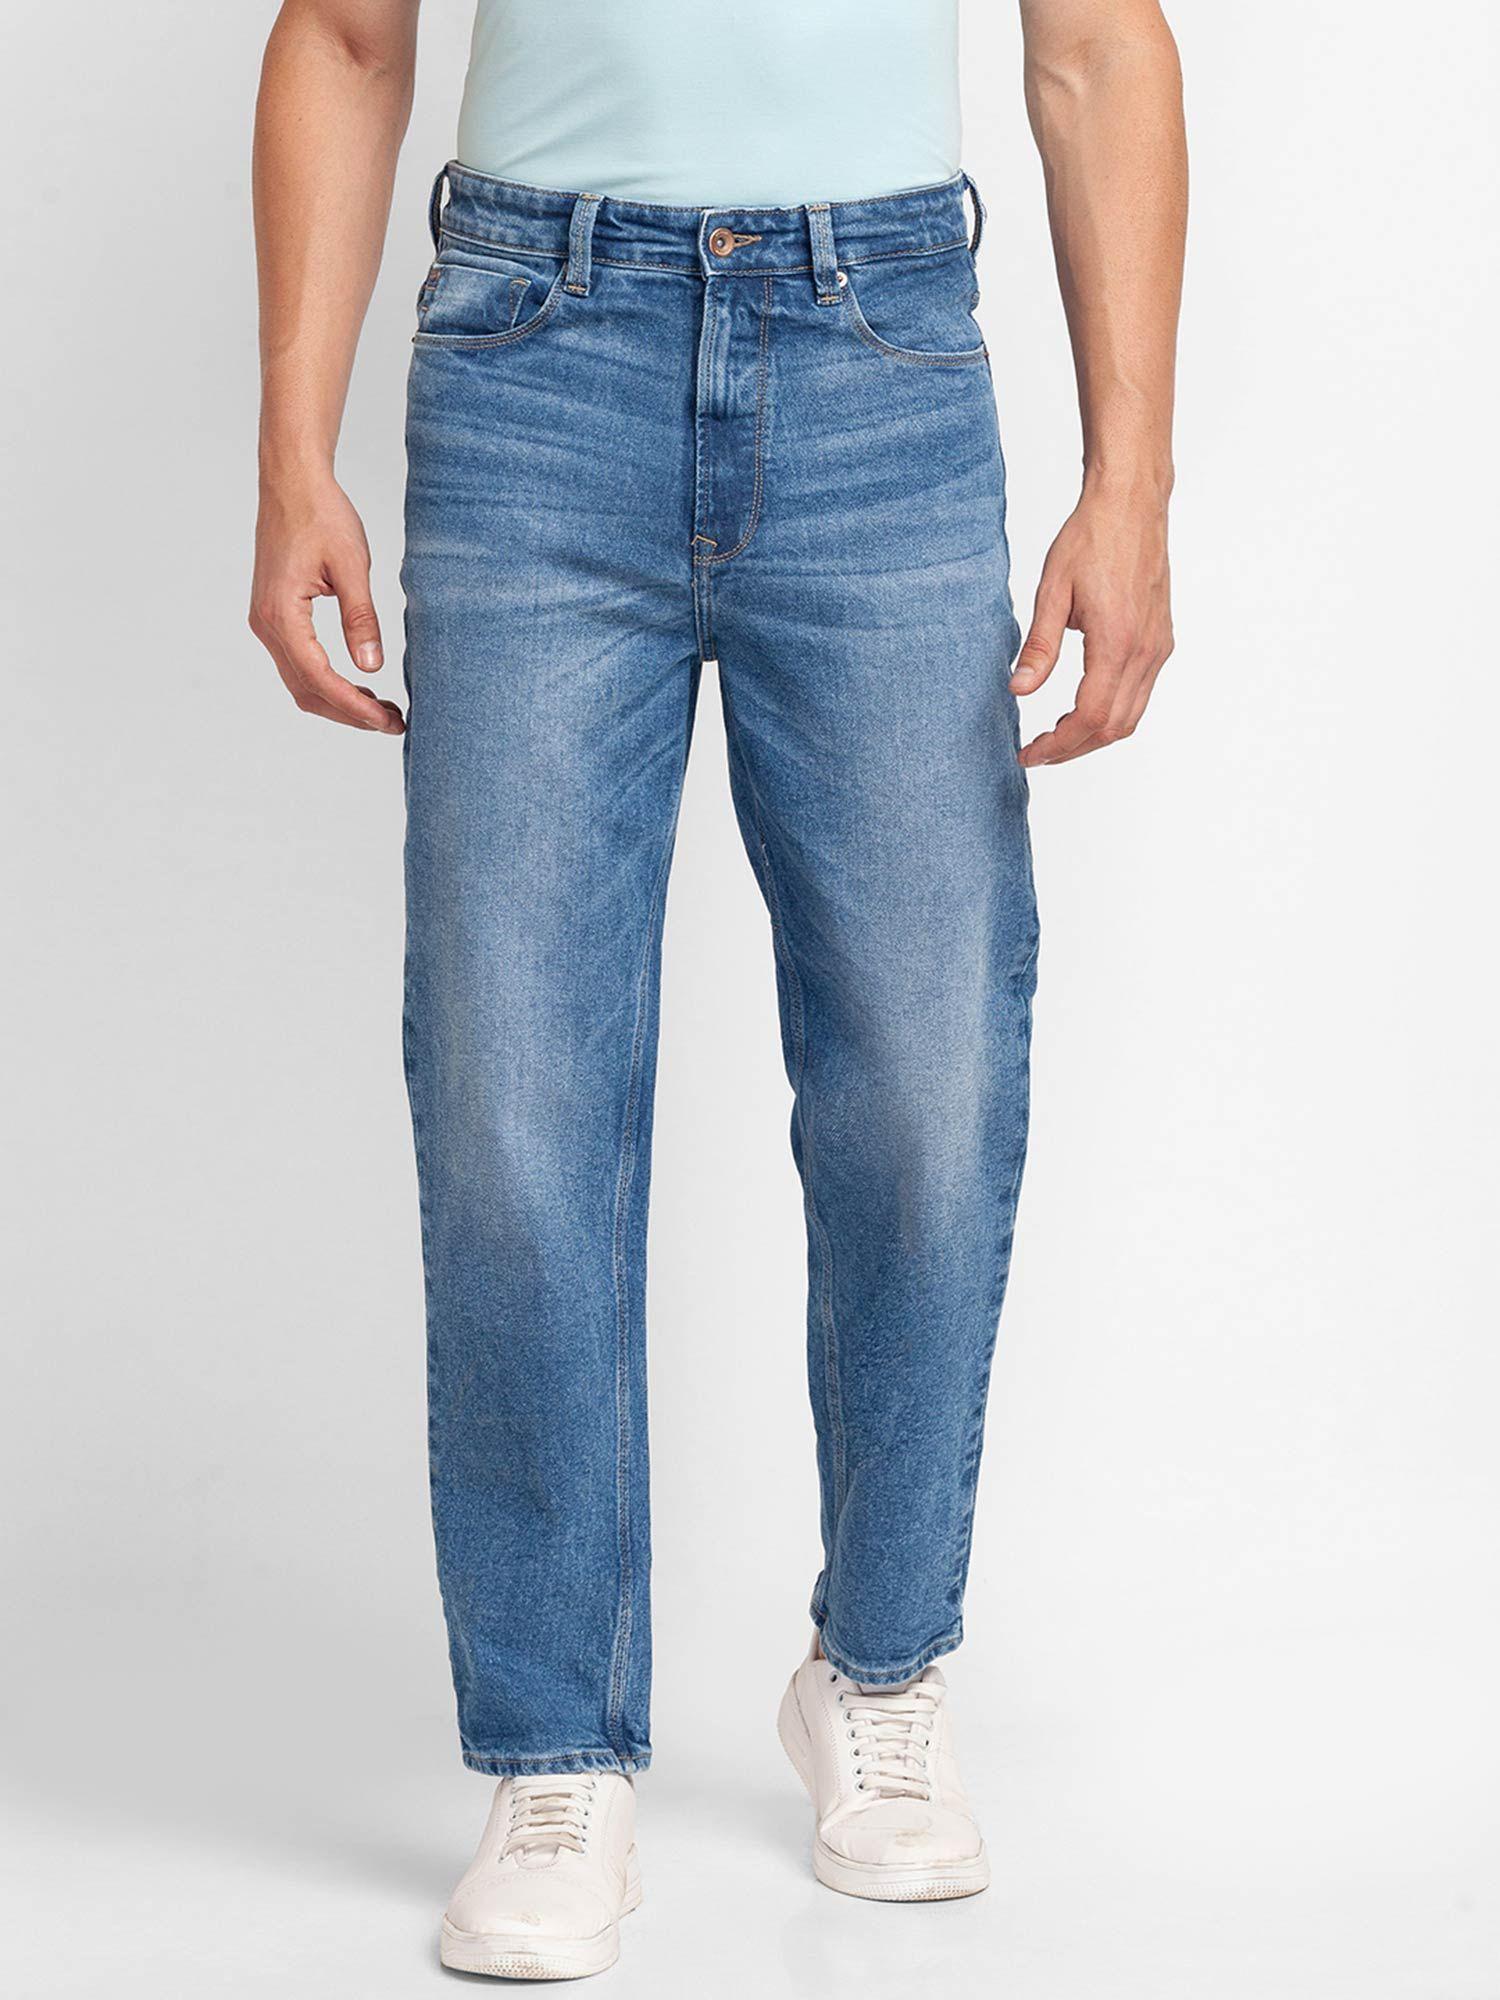 mid blue cotton loose fit regular length jeans for men (renato)